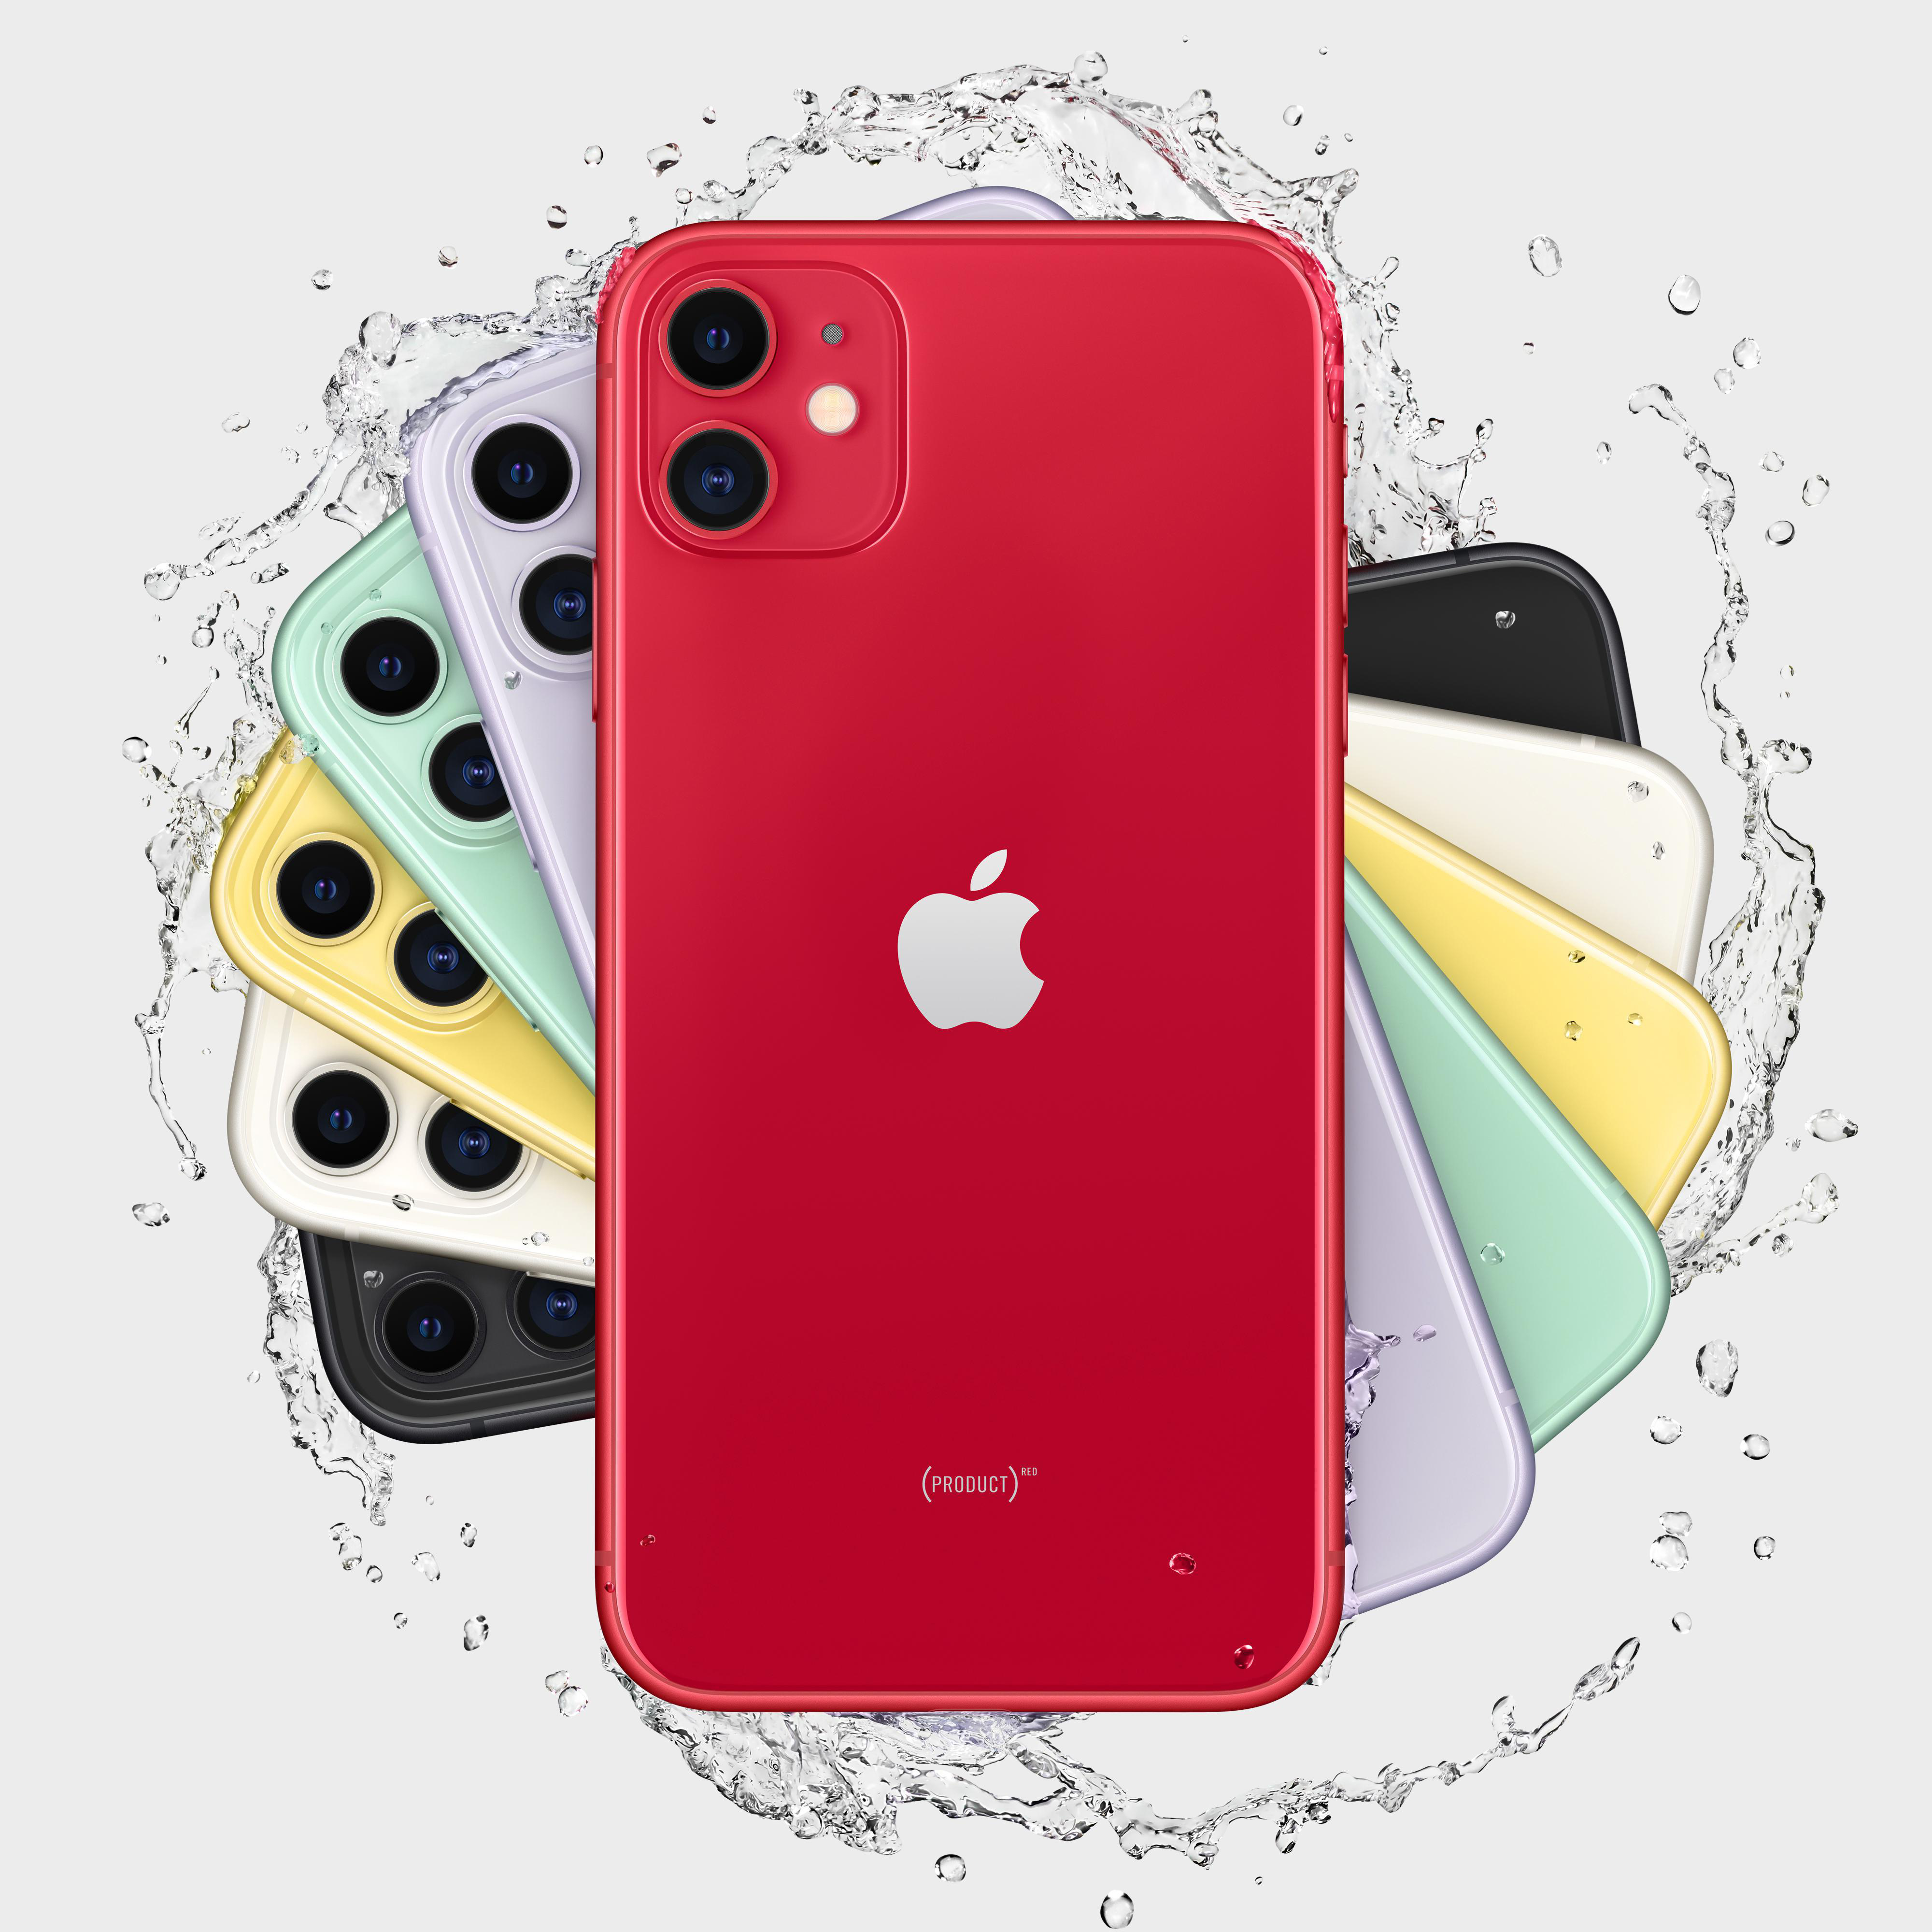 APPLE iPhone 11 64 GB Dual SIM Red